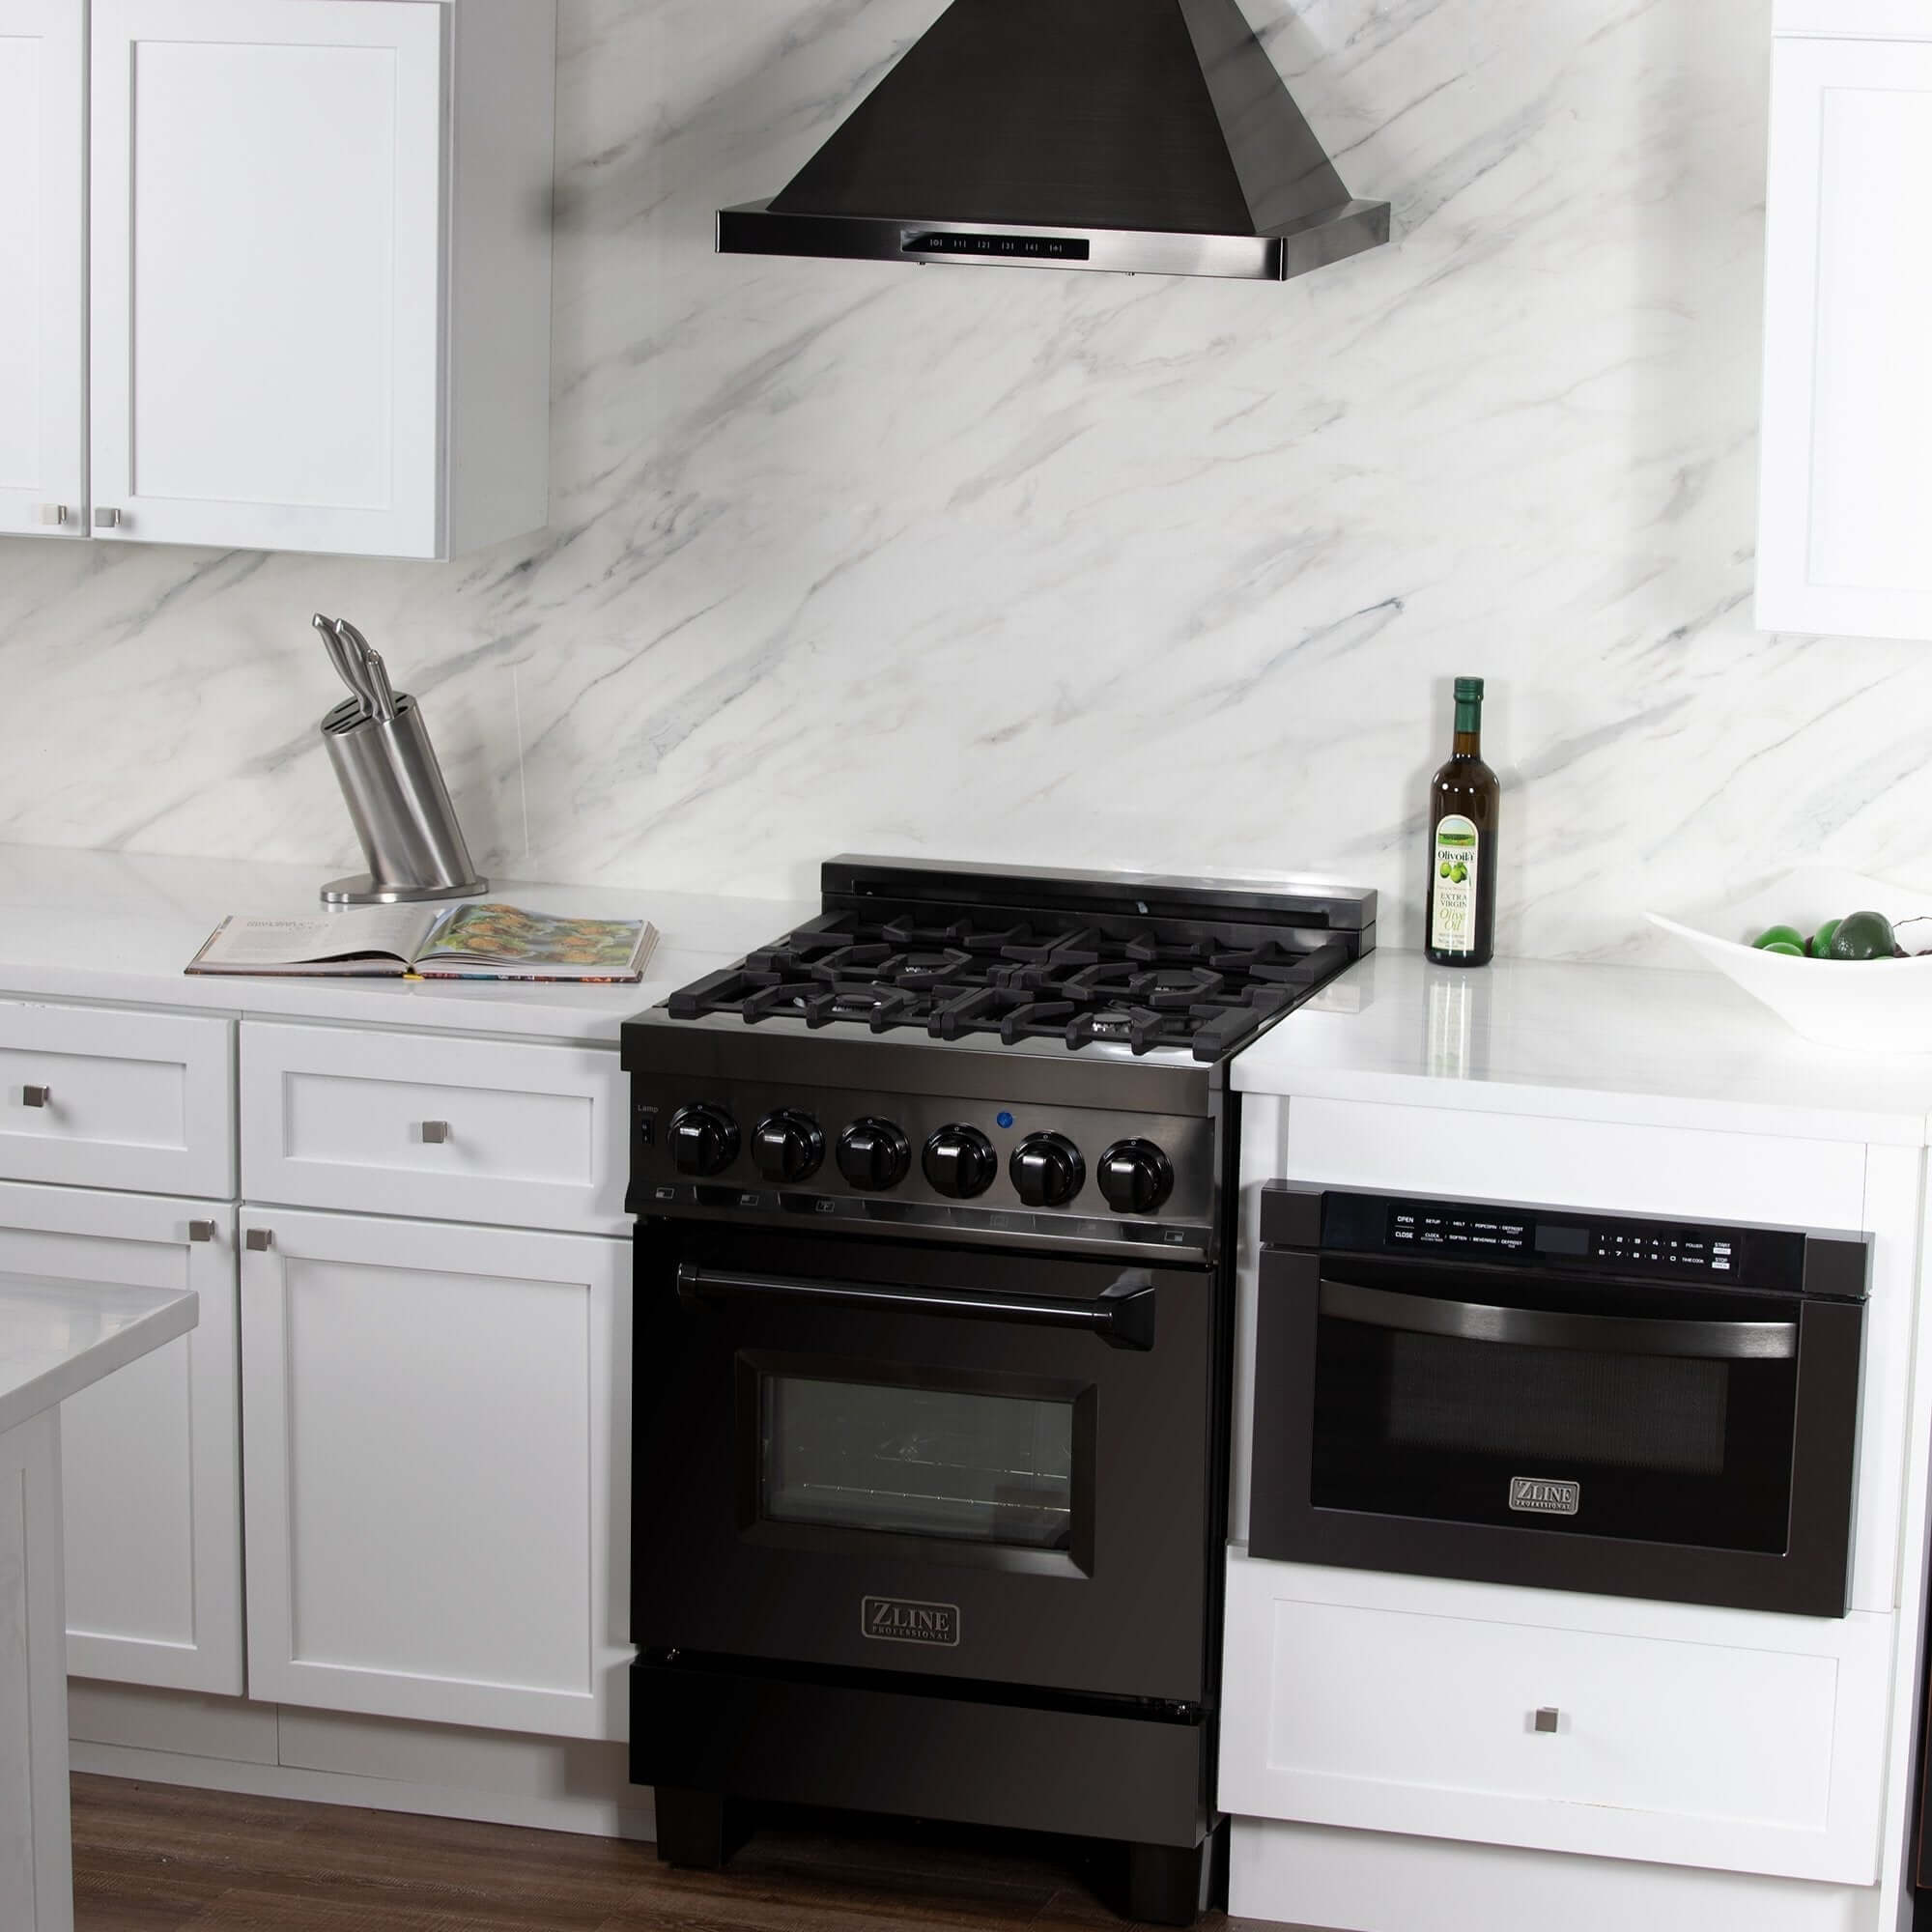 ZLINE black stainless steel appliances in a white cottage-style kitchen.